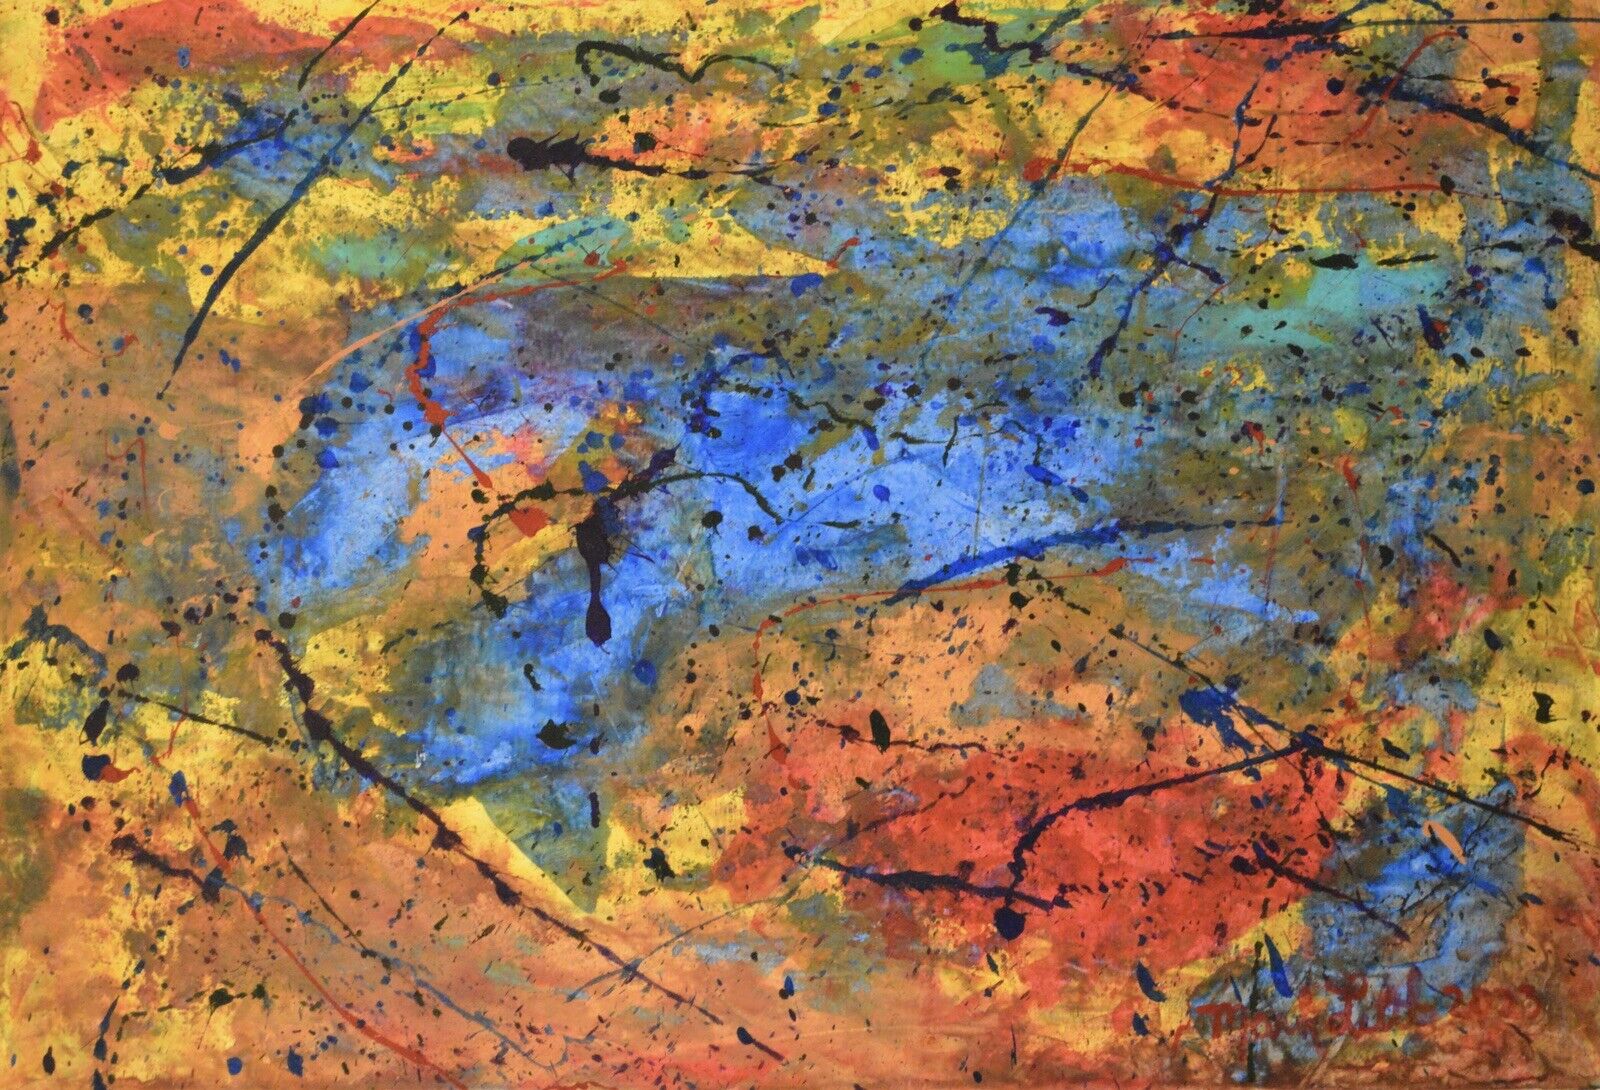 64”X44” Pollock/Richter style canvas ￼painting Acrylic,Abstract, Modern,X Large Без бренда - фотография #10